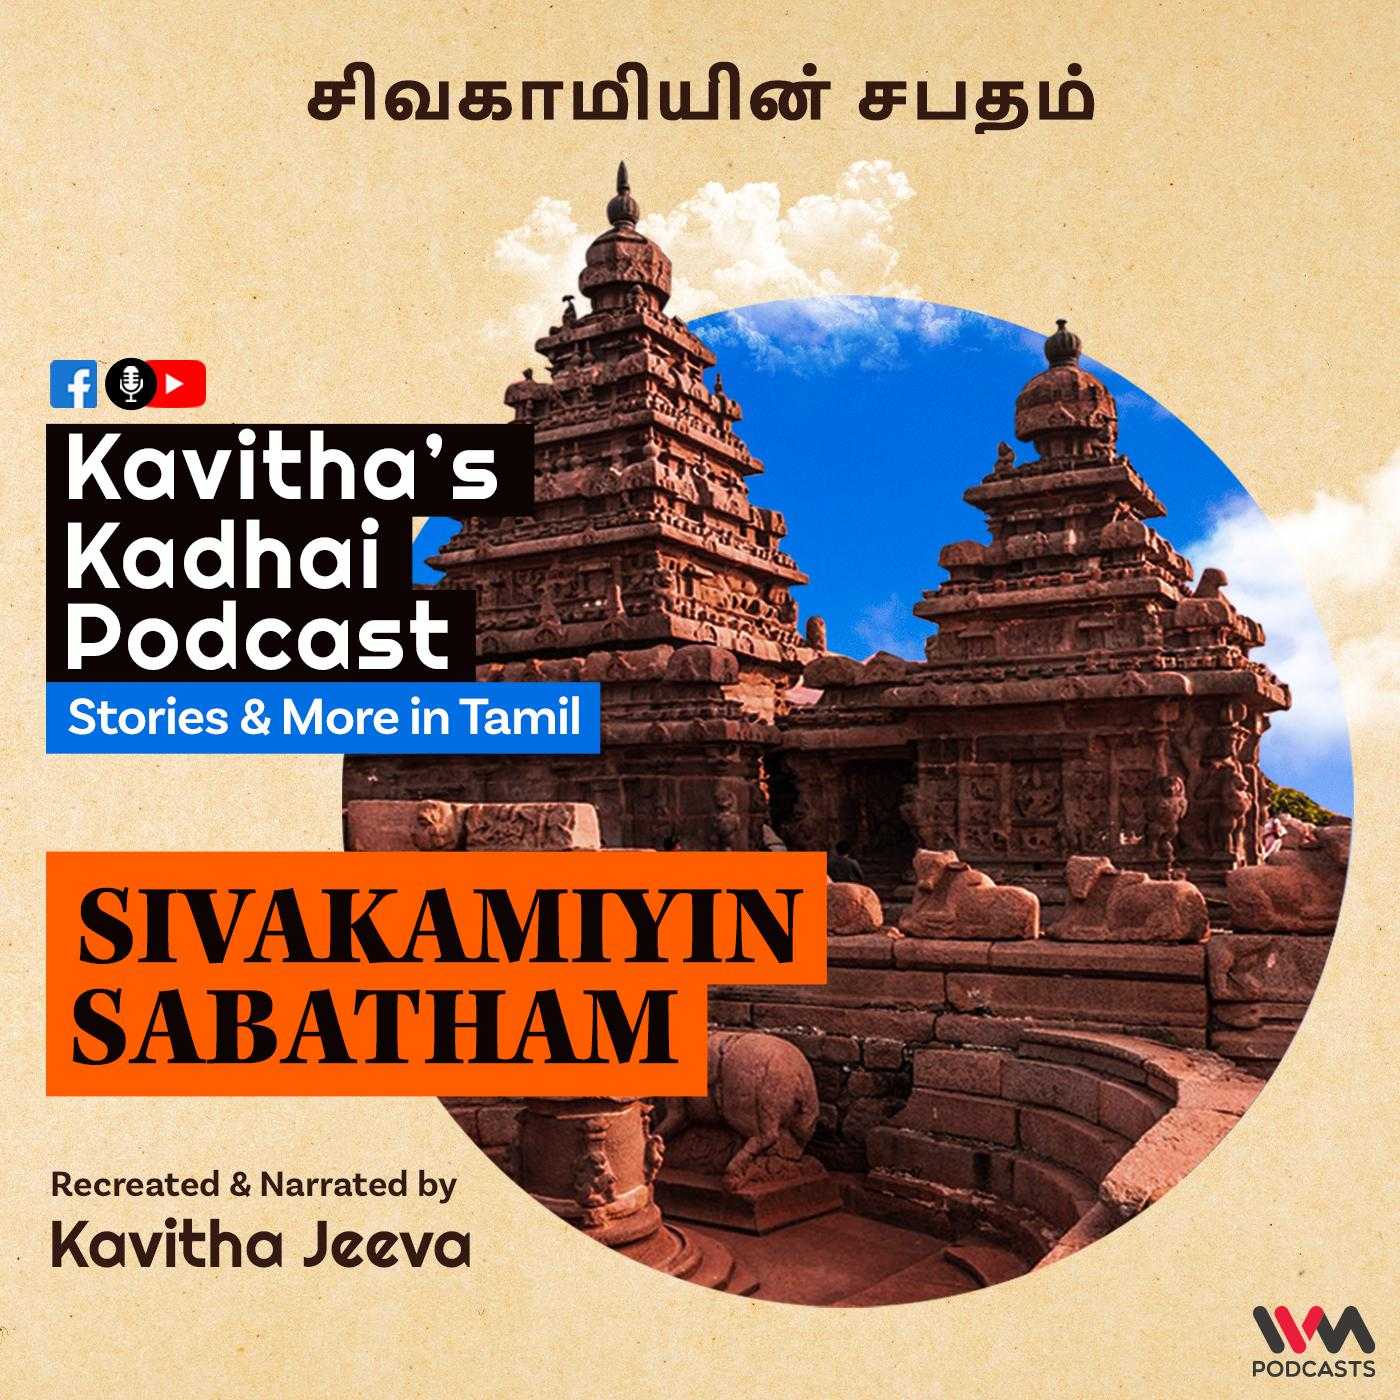 KadhaiPodcast's Sivakamiyin Sabatham with Kavitha Jeeva - Episode #110